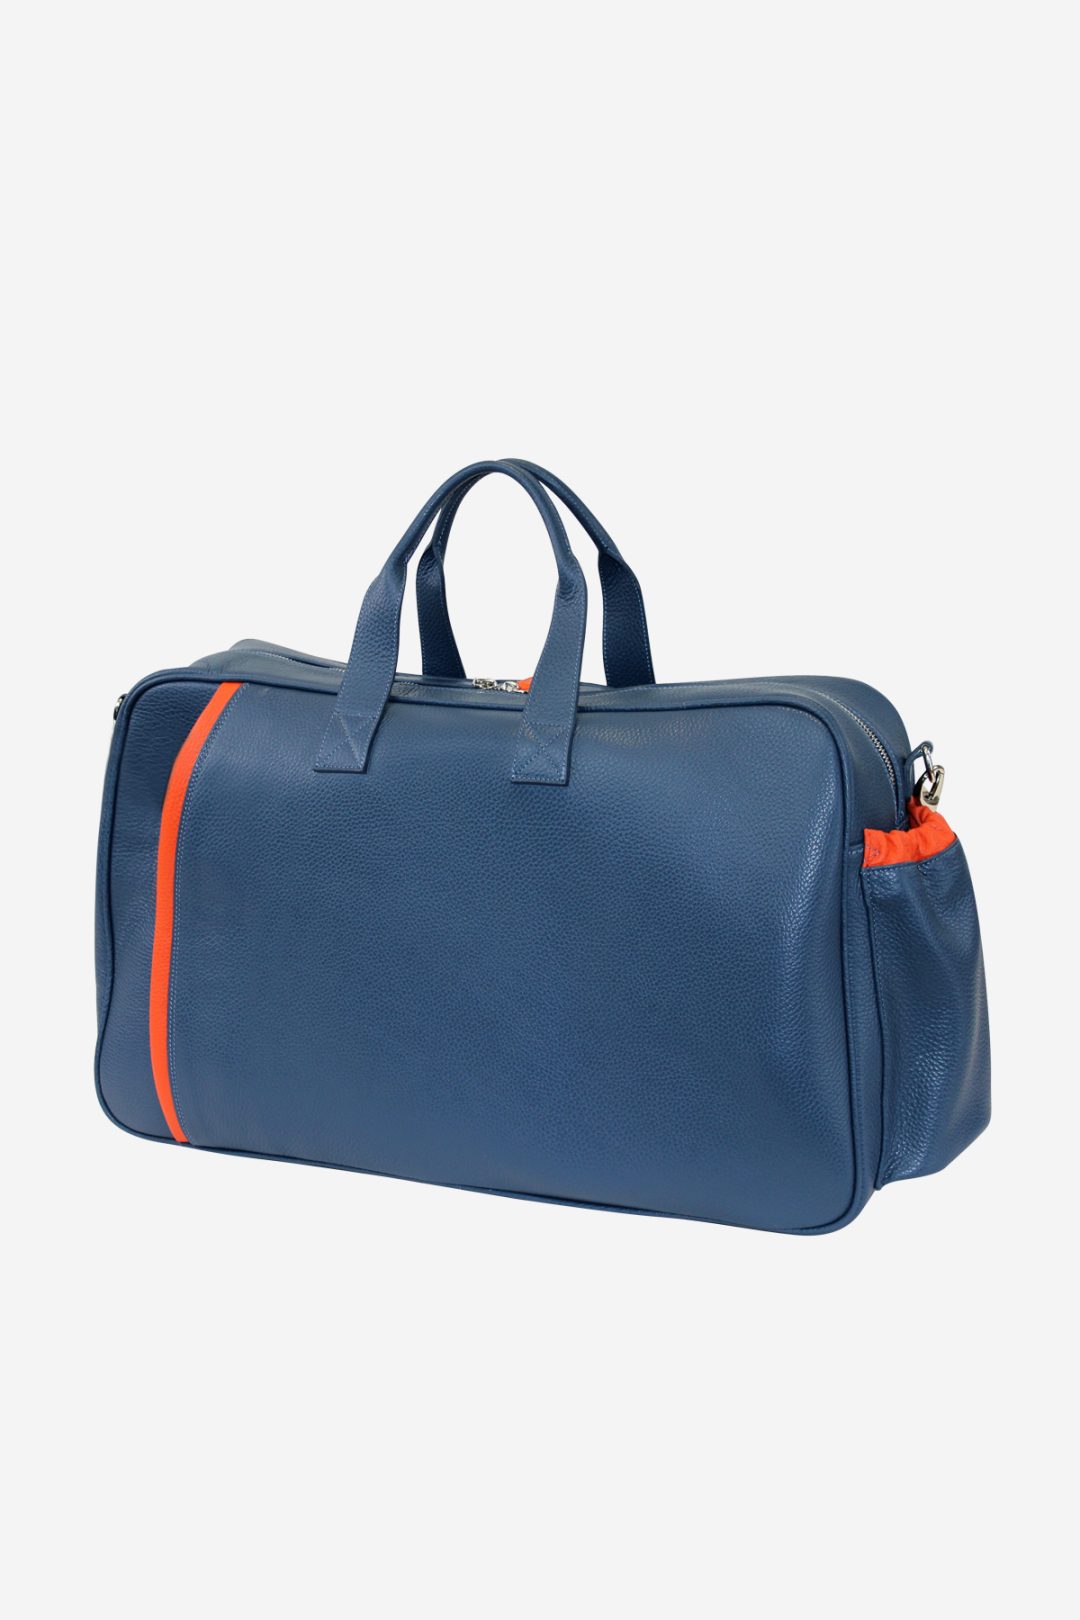 Classic Sport Bag Terrida - Handmade in Italy, waterproof leather